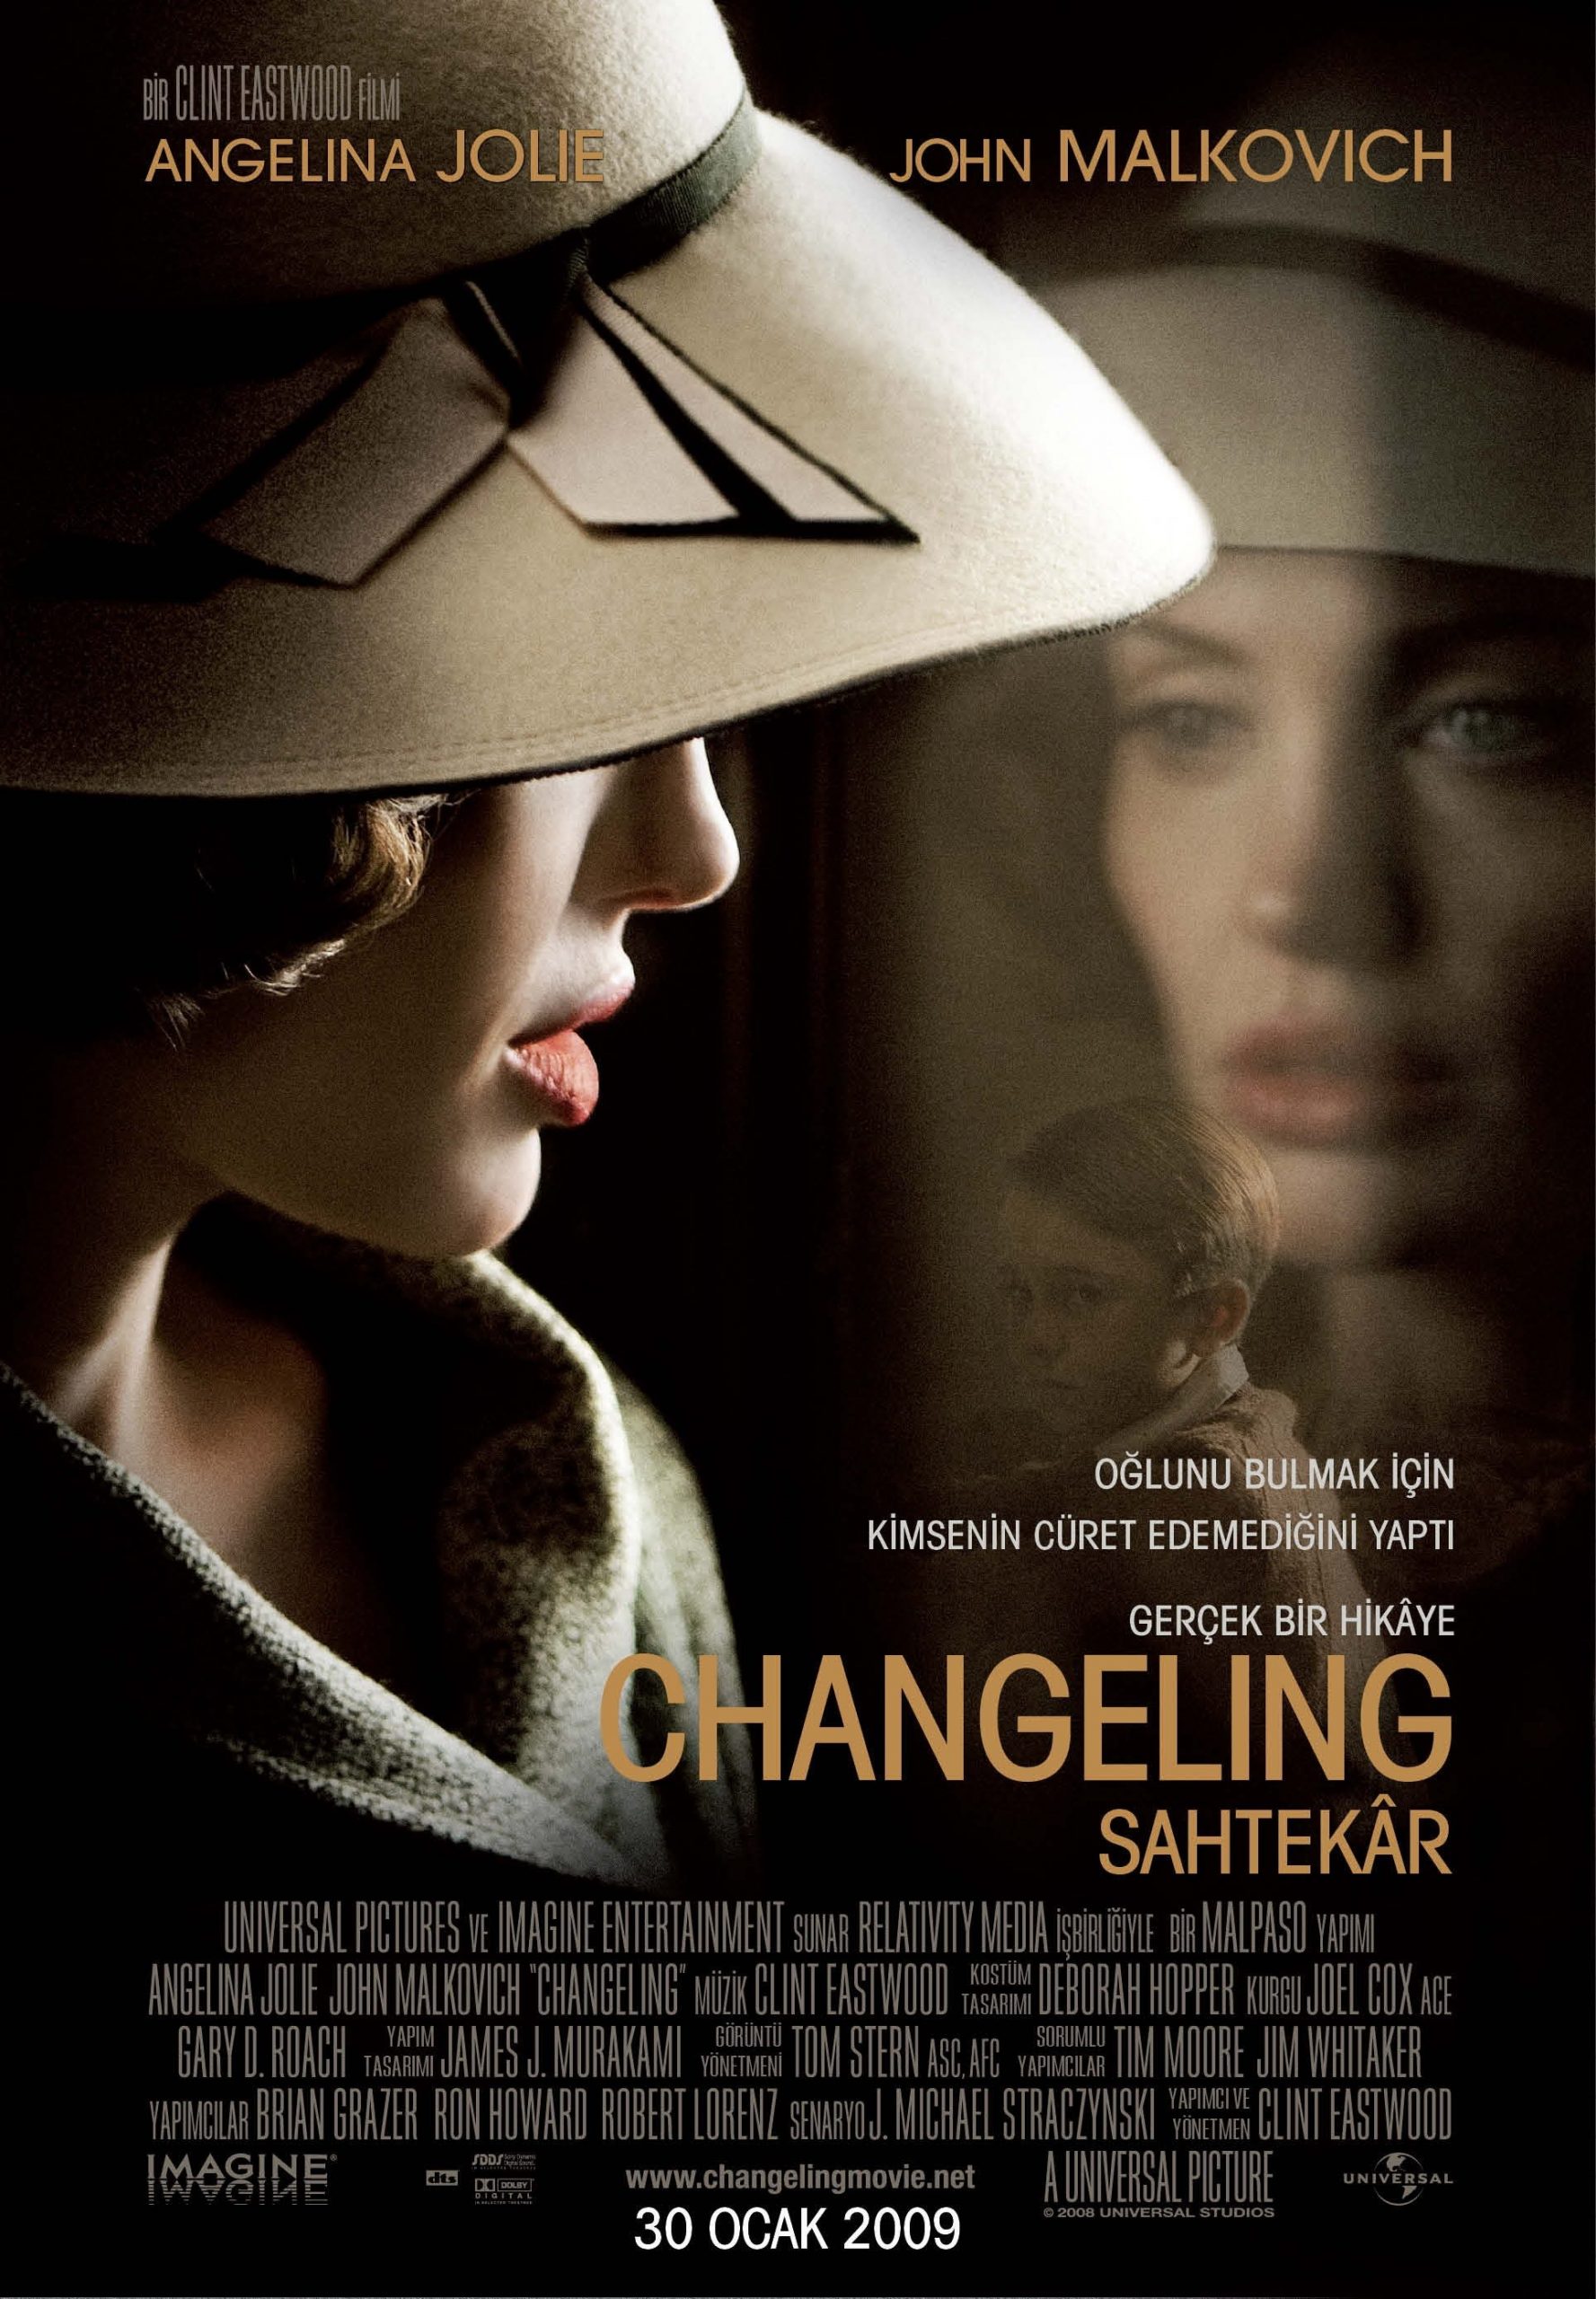 Changeling (2008) กระชากปมปริศนาคดีอำพราง พากย์ไทย